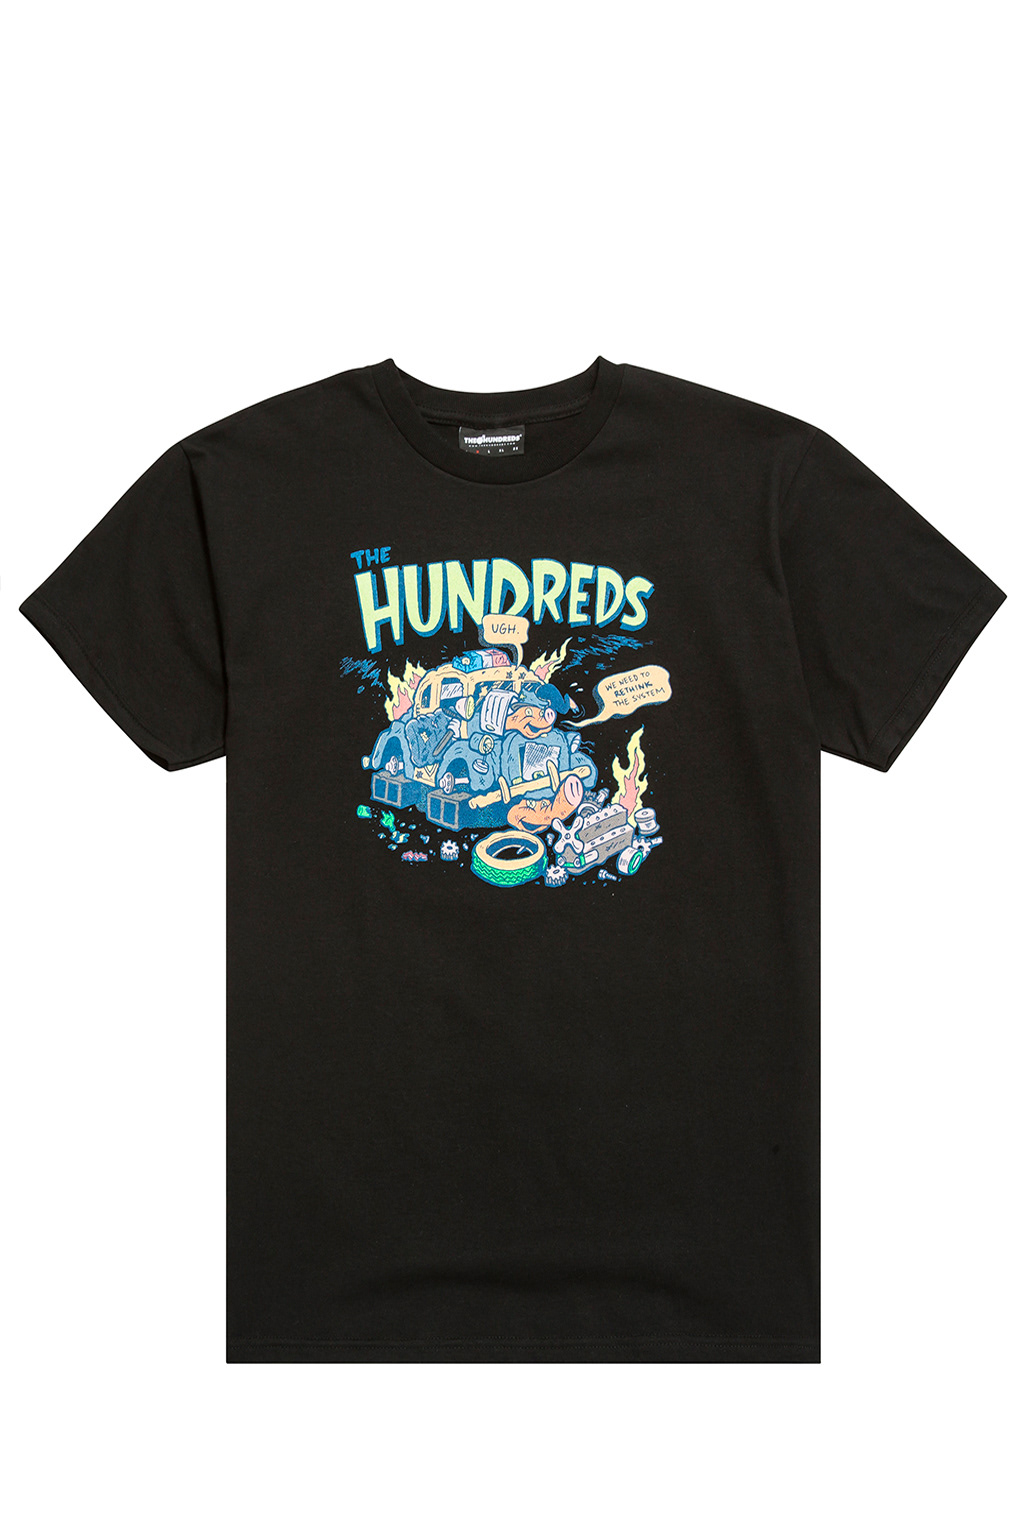 streetwear tshirts graphics Los Angeles designer shirt design logo merchandise lettering